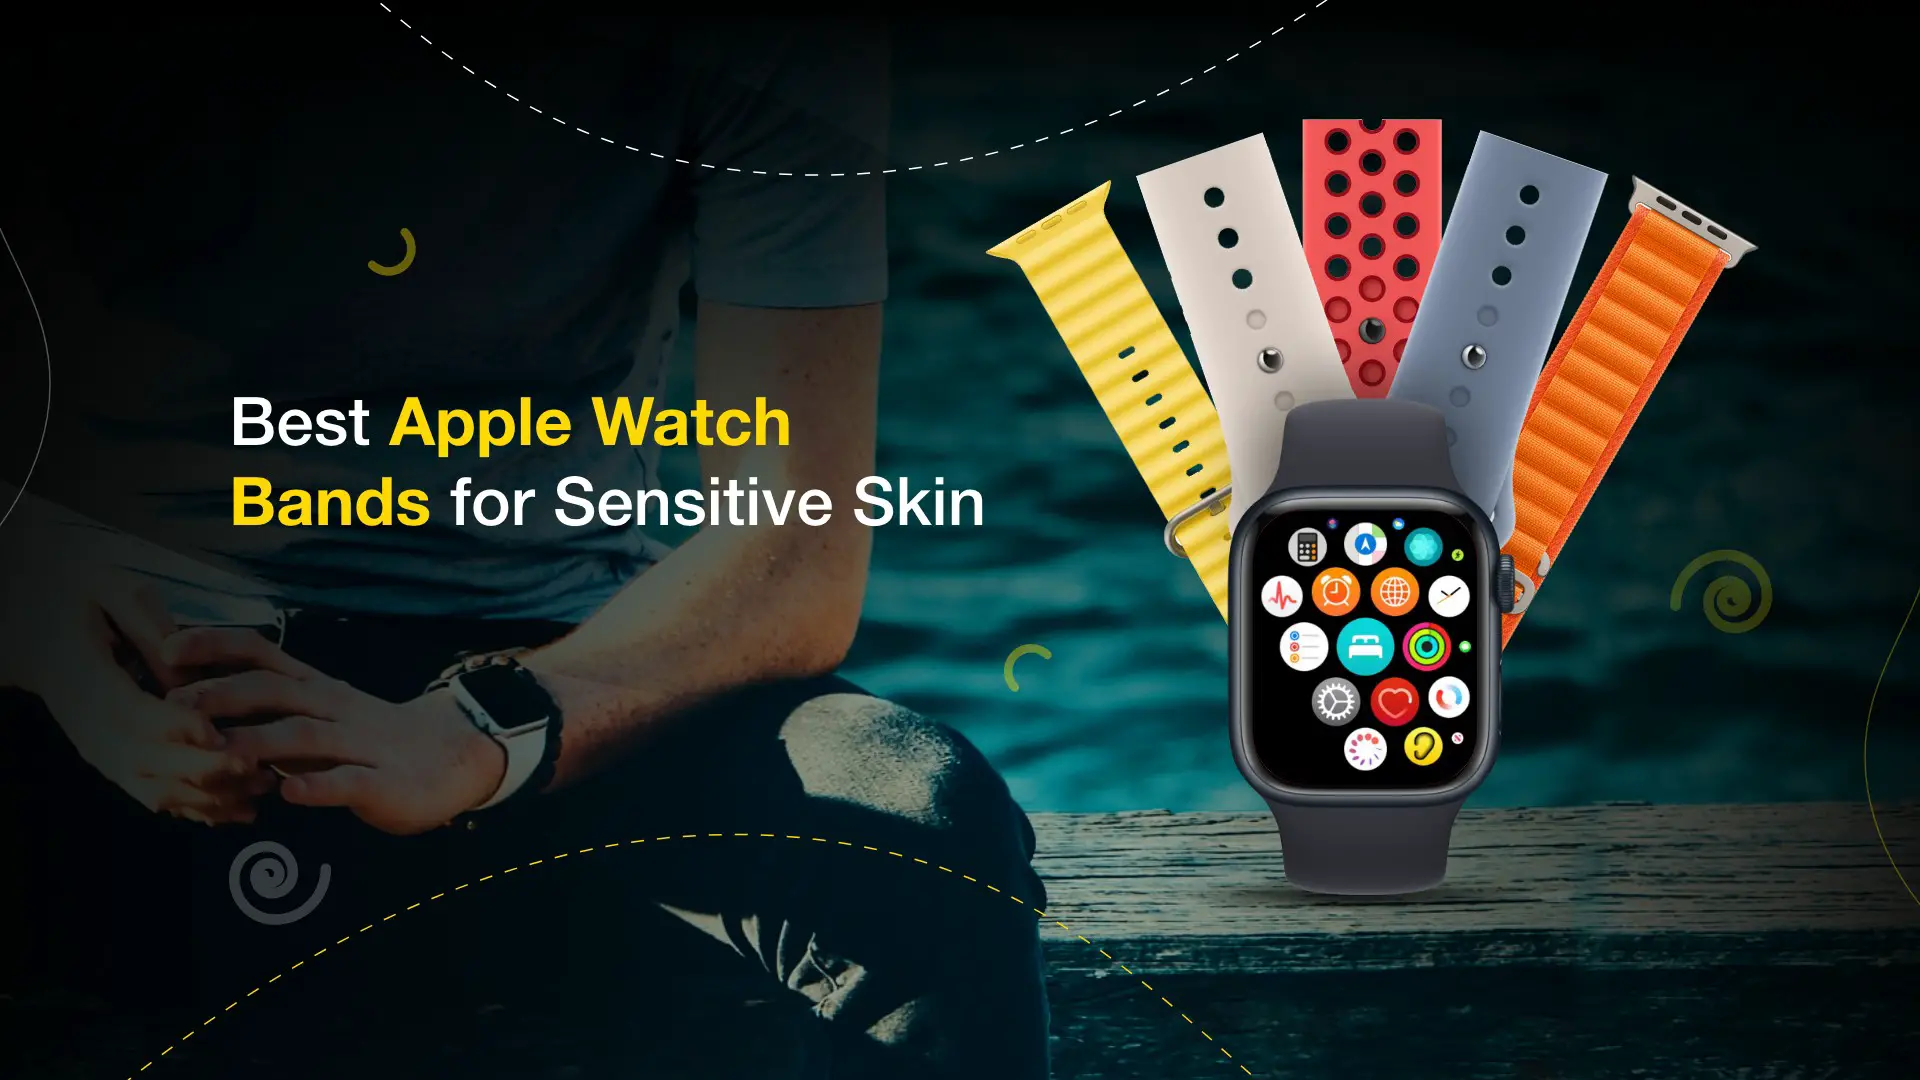 13 Best Apple Watch Bands for Sensitive Skin